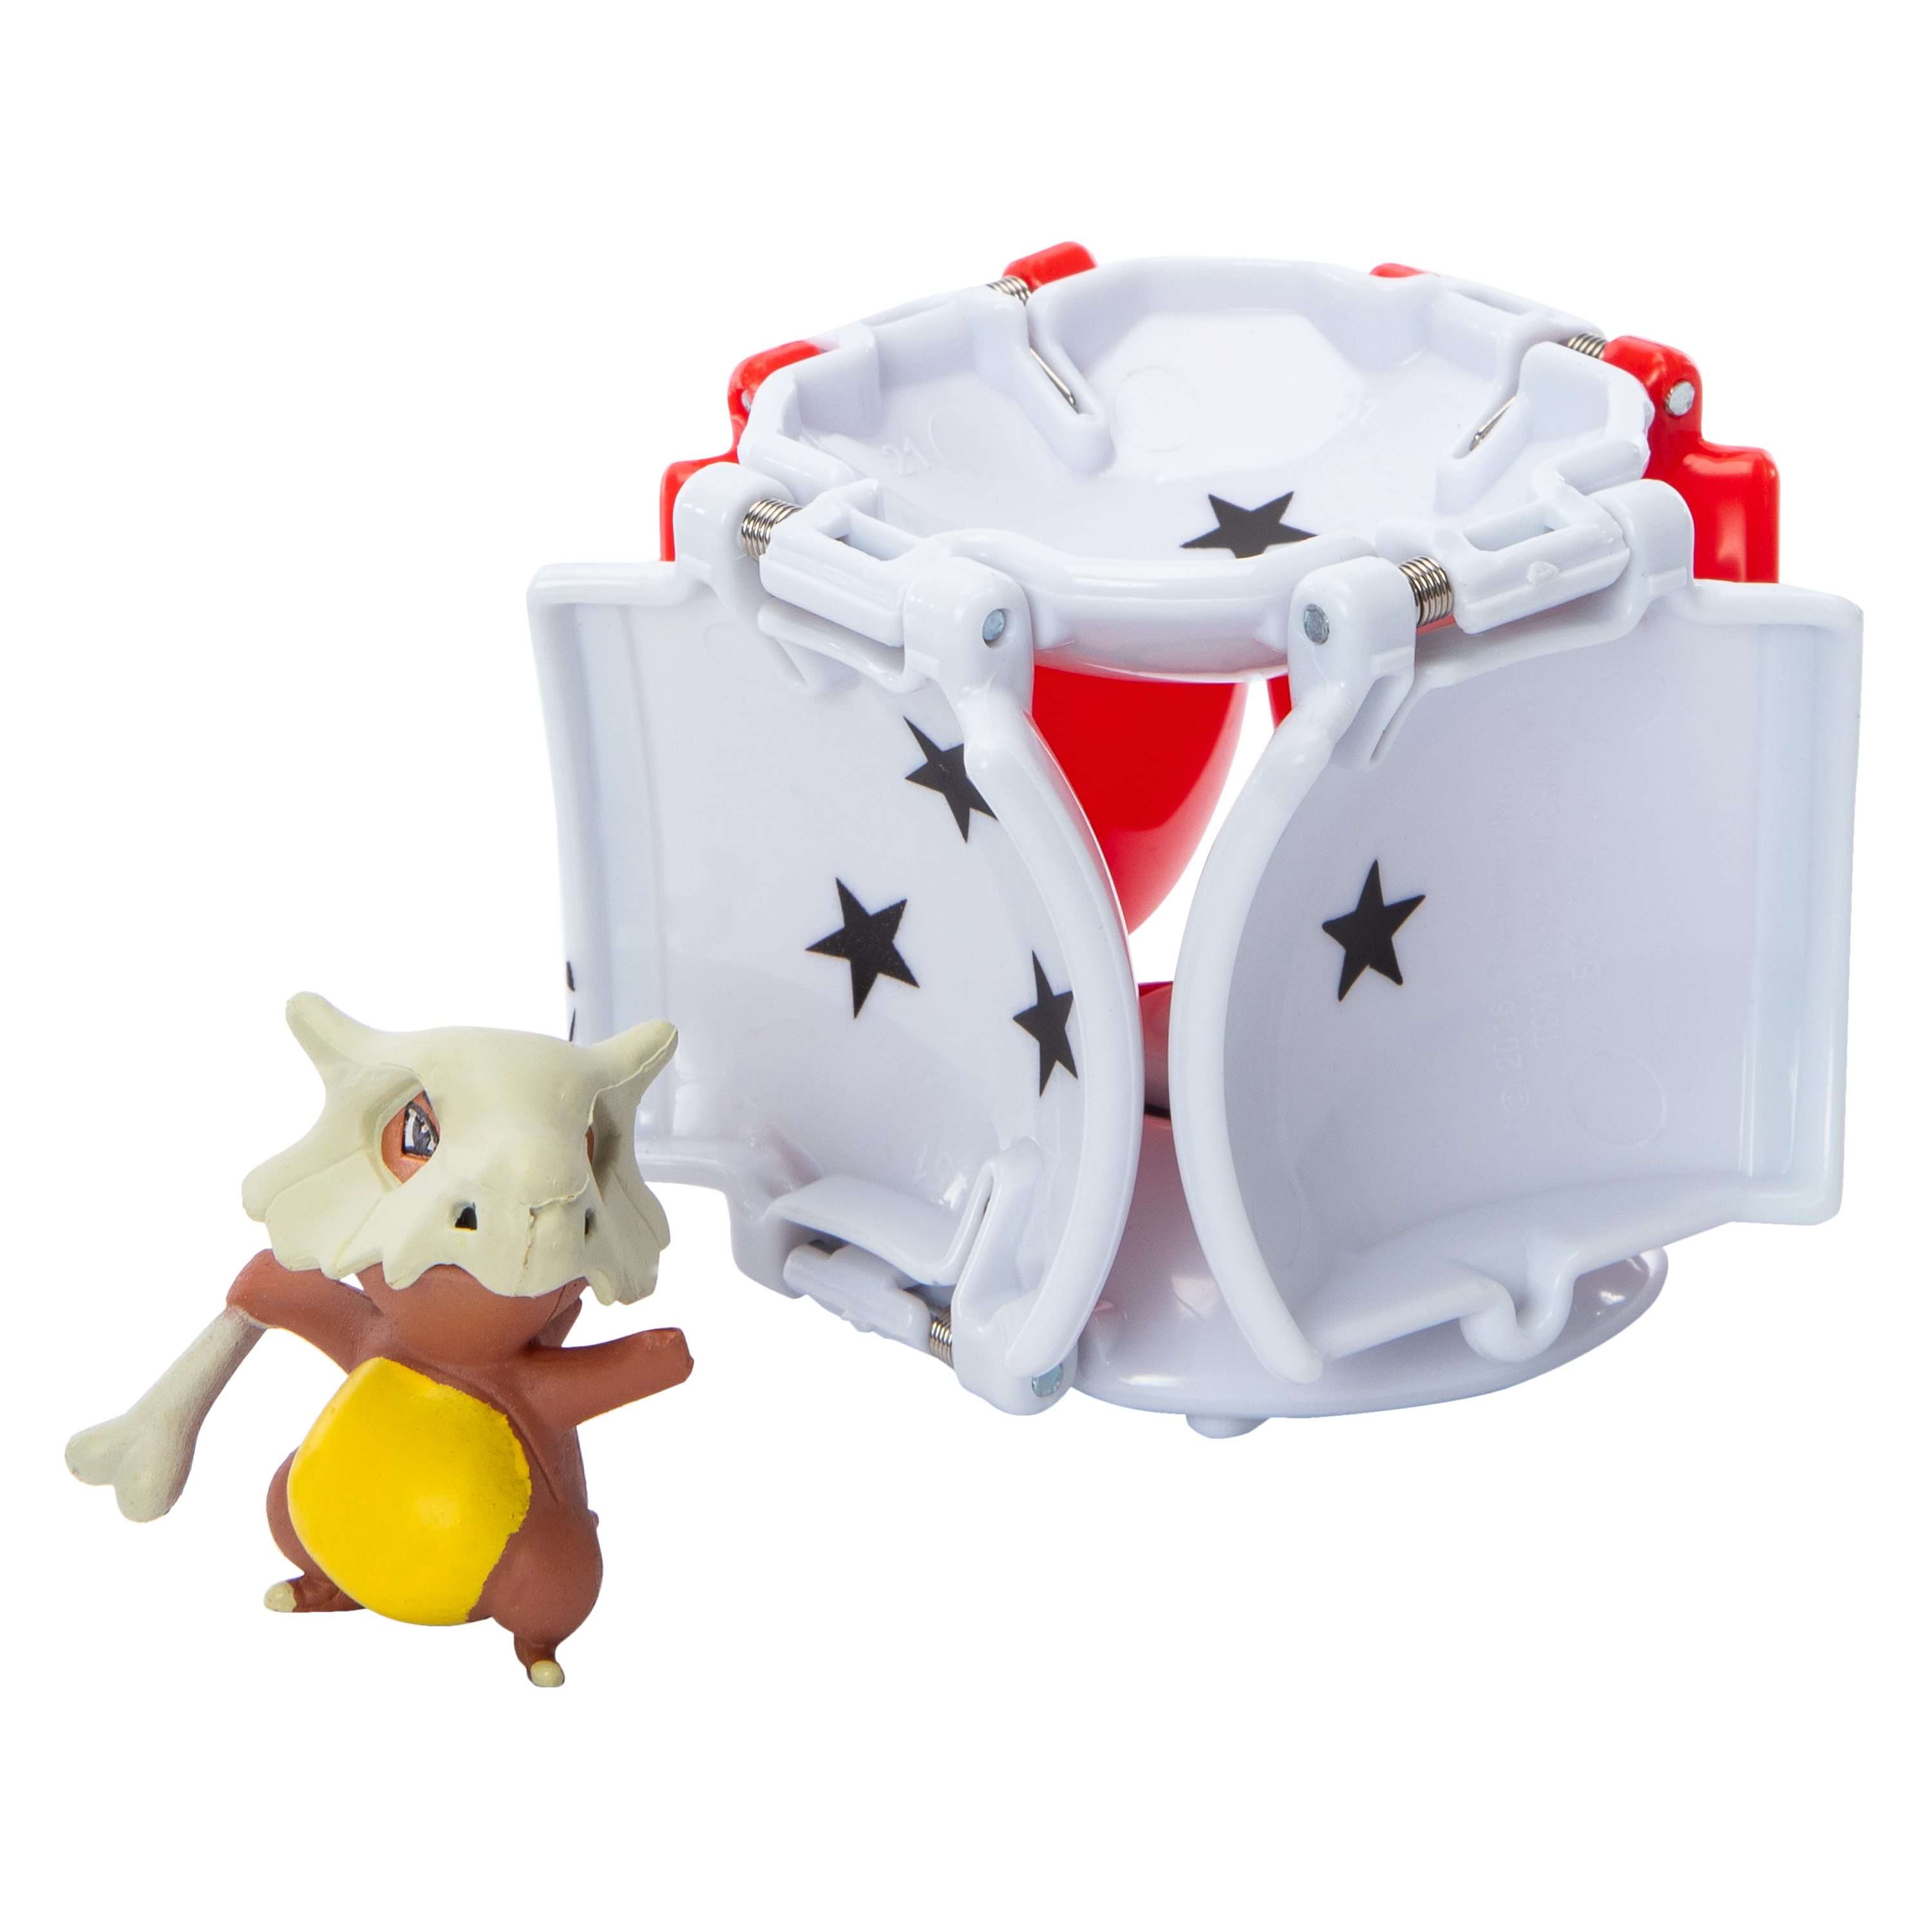 Pokemon™ Trainer Pokeball & Figure Set